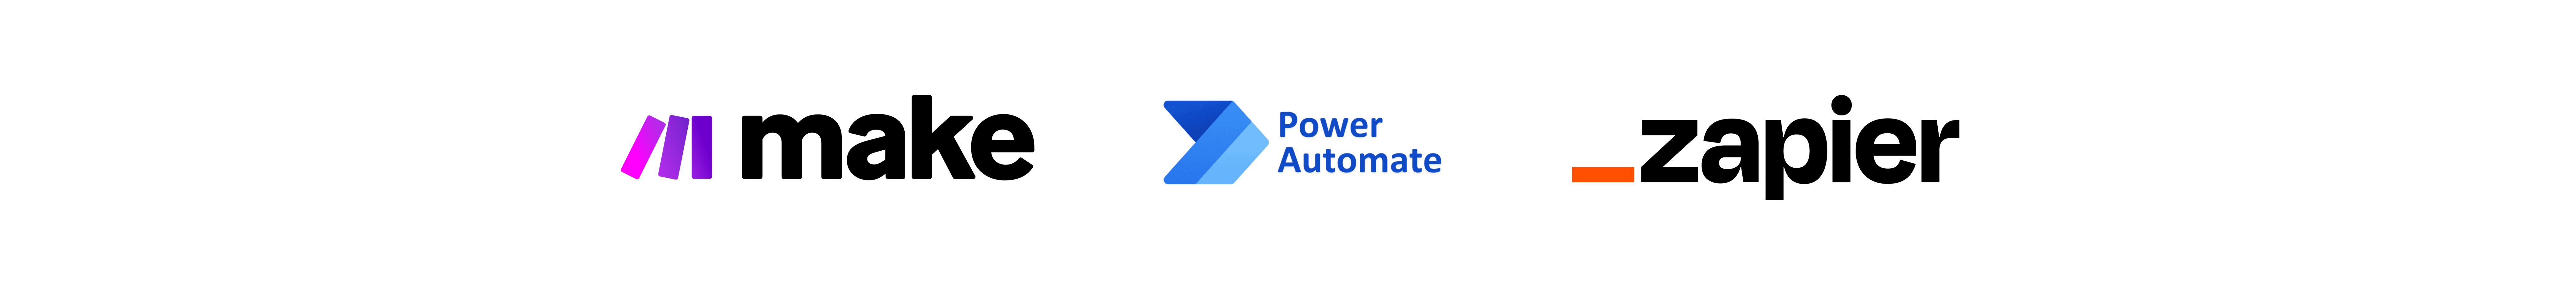 Integratie logo's Make, Power Automate, Zapier